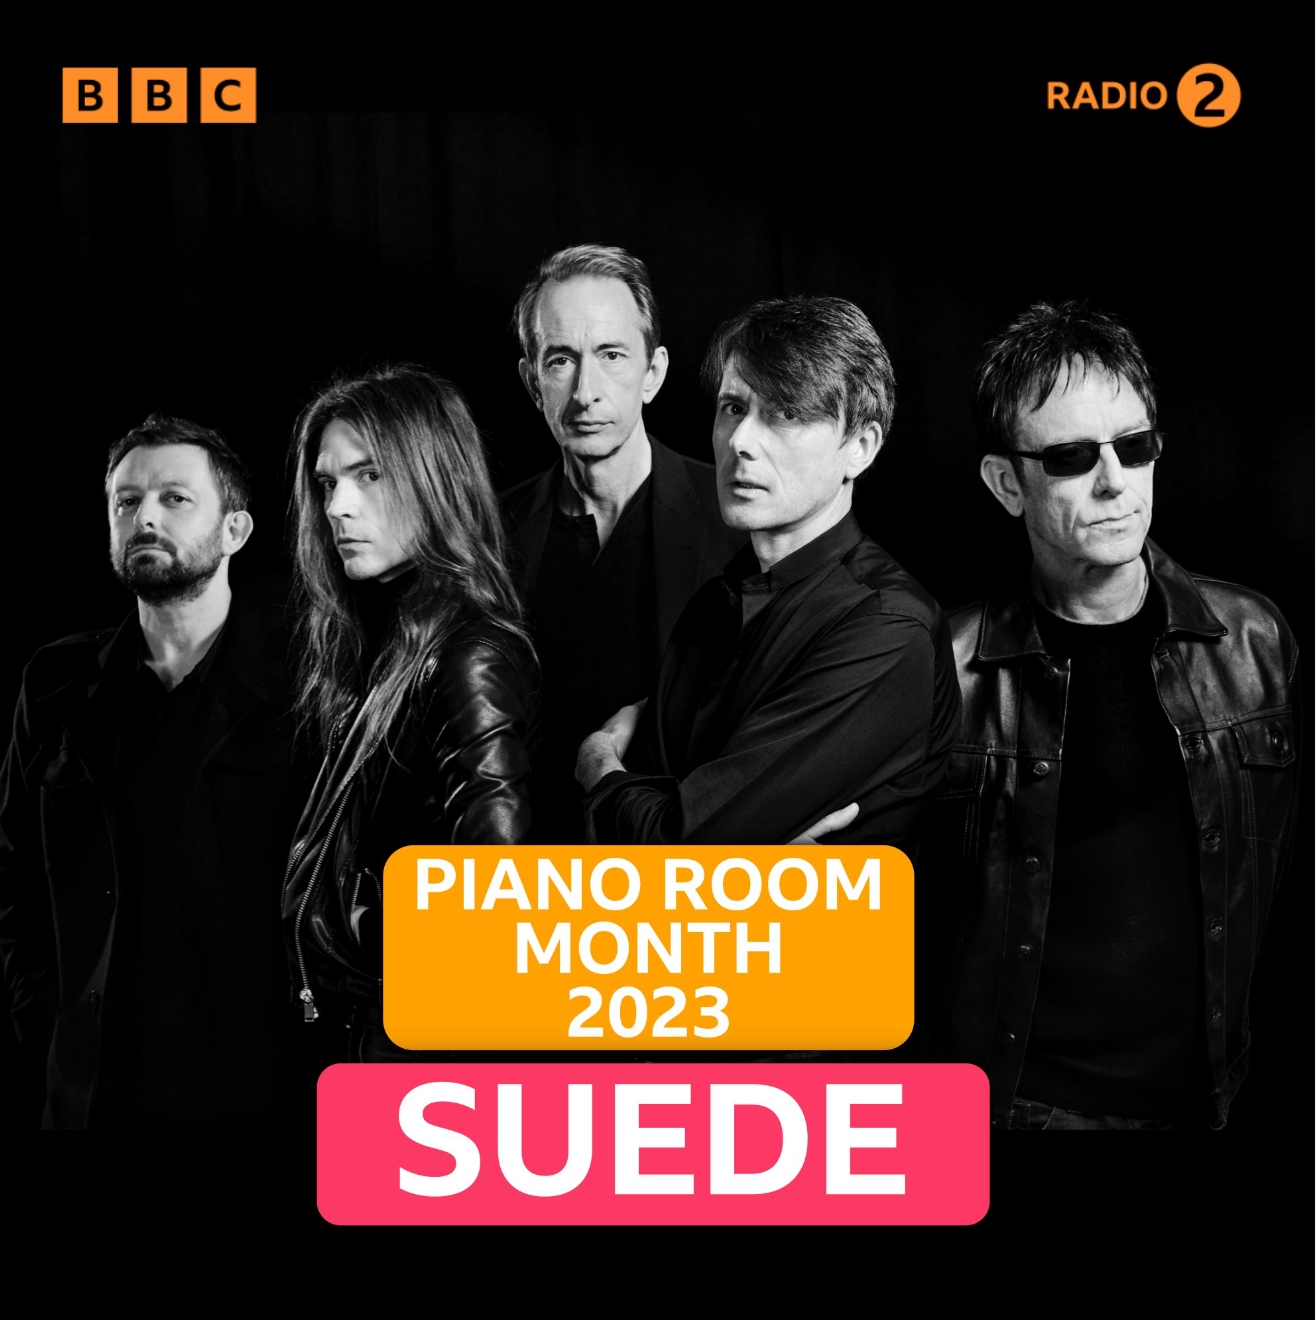 Le Live de la semaine – Suede ft BBC Concert Orchestra (R2 Piano Room)